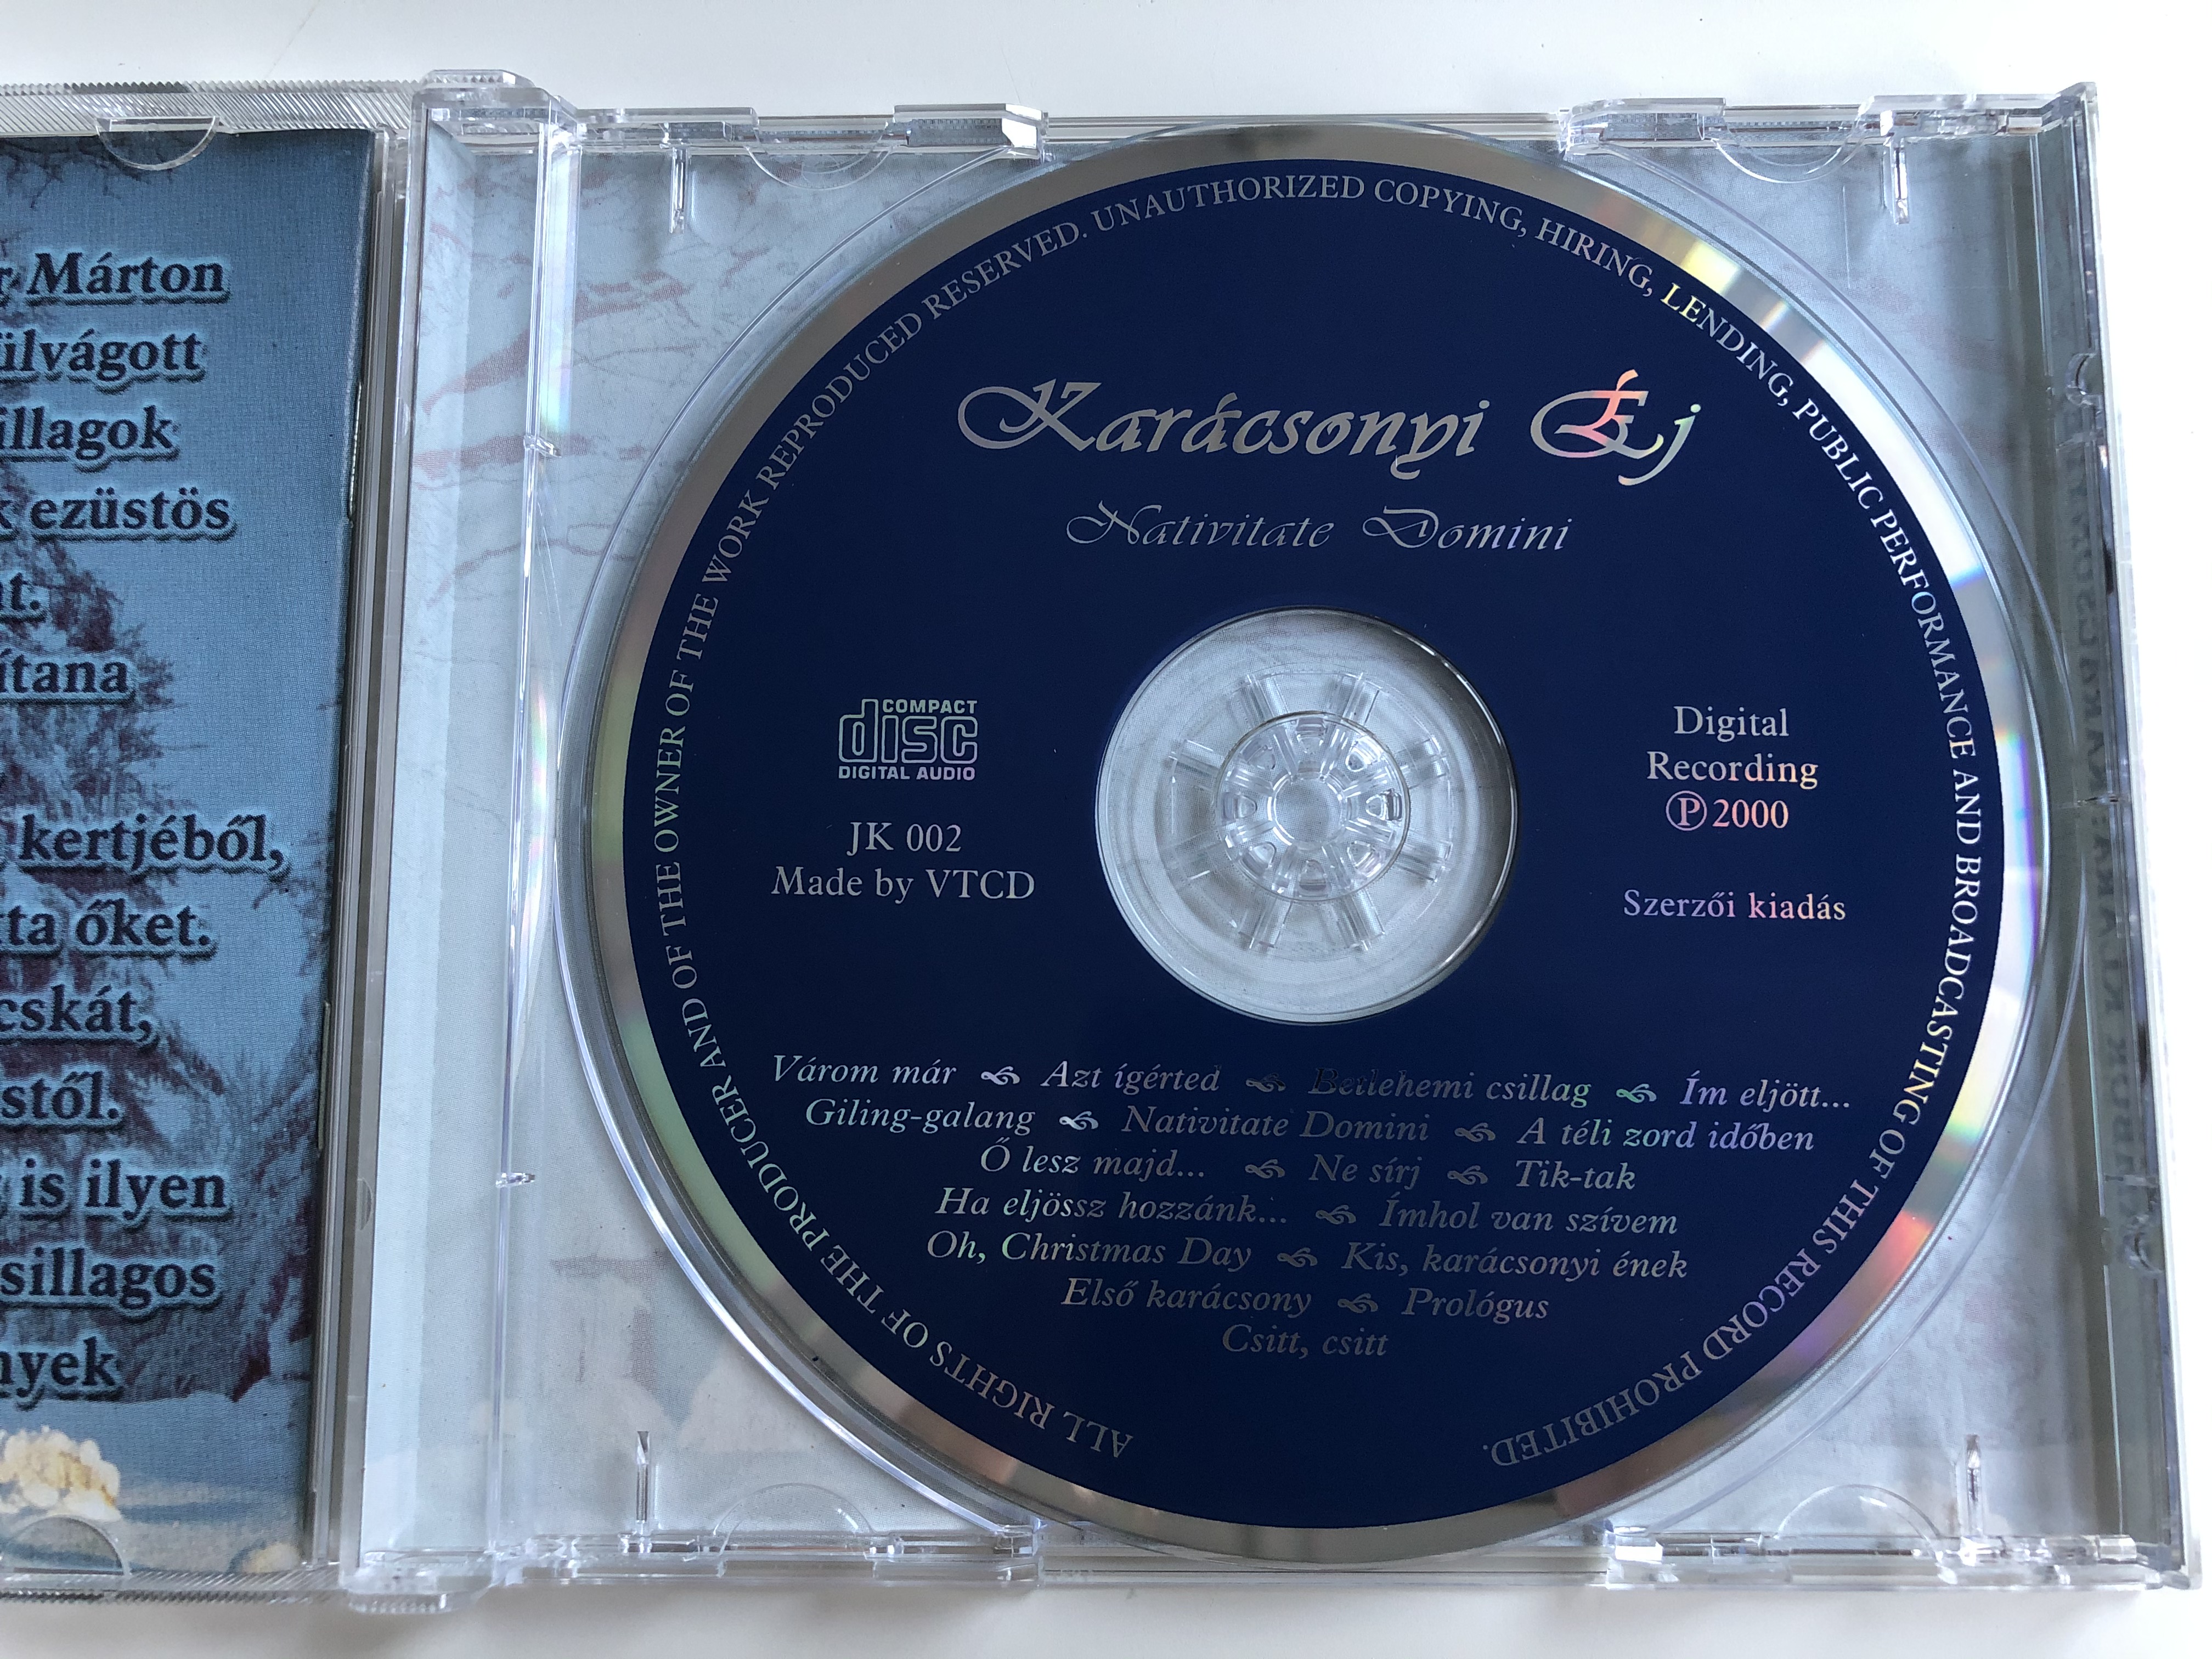 kar-csonyi-j-christmas-night-la-nuit-sainte-christ-nacht-nativitate-domini-audio-cd-2000-jk-002-6-.jpg